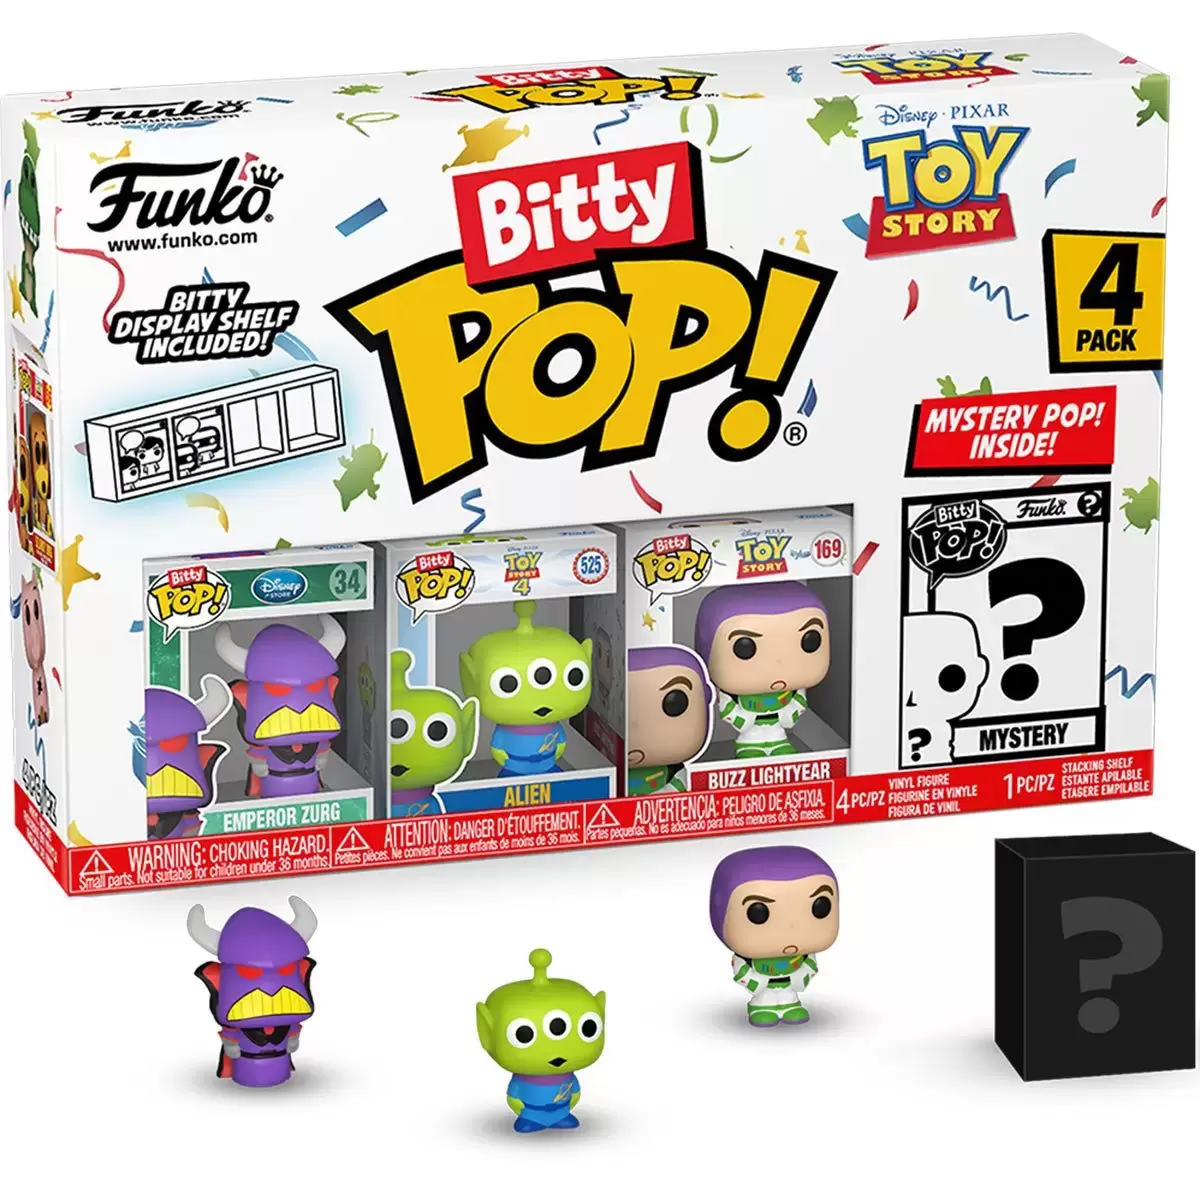 Bitty POP! - Toy Story - Emperor Zurg, Alien, Buzz Lightyear & Mystery